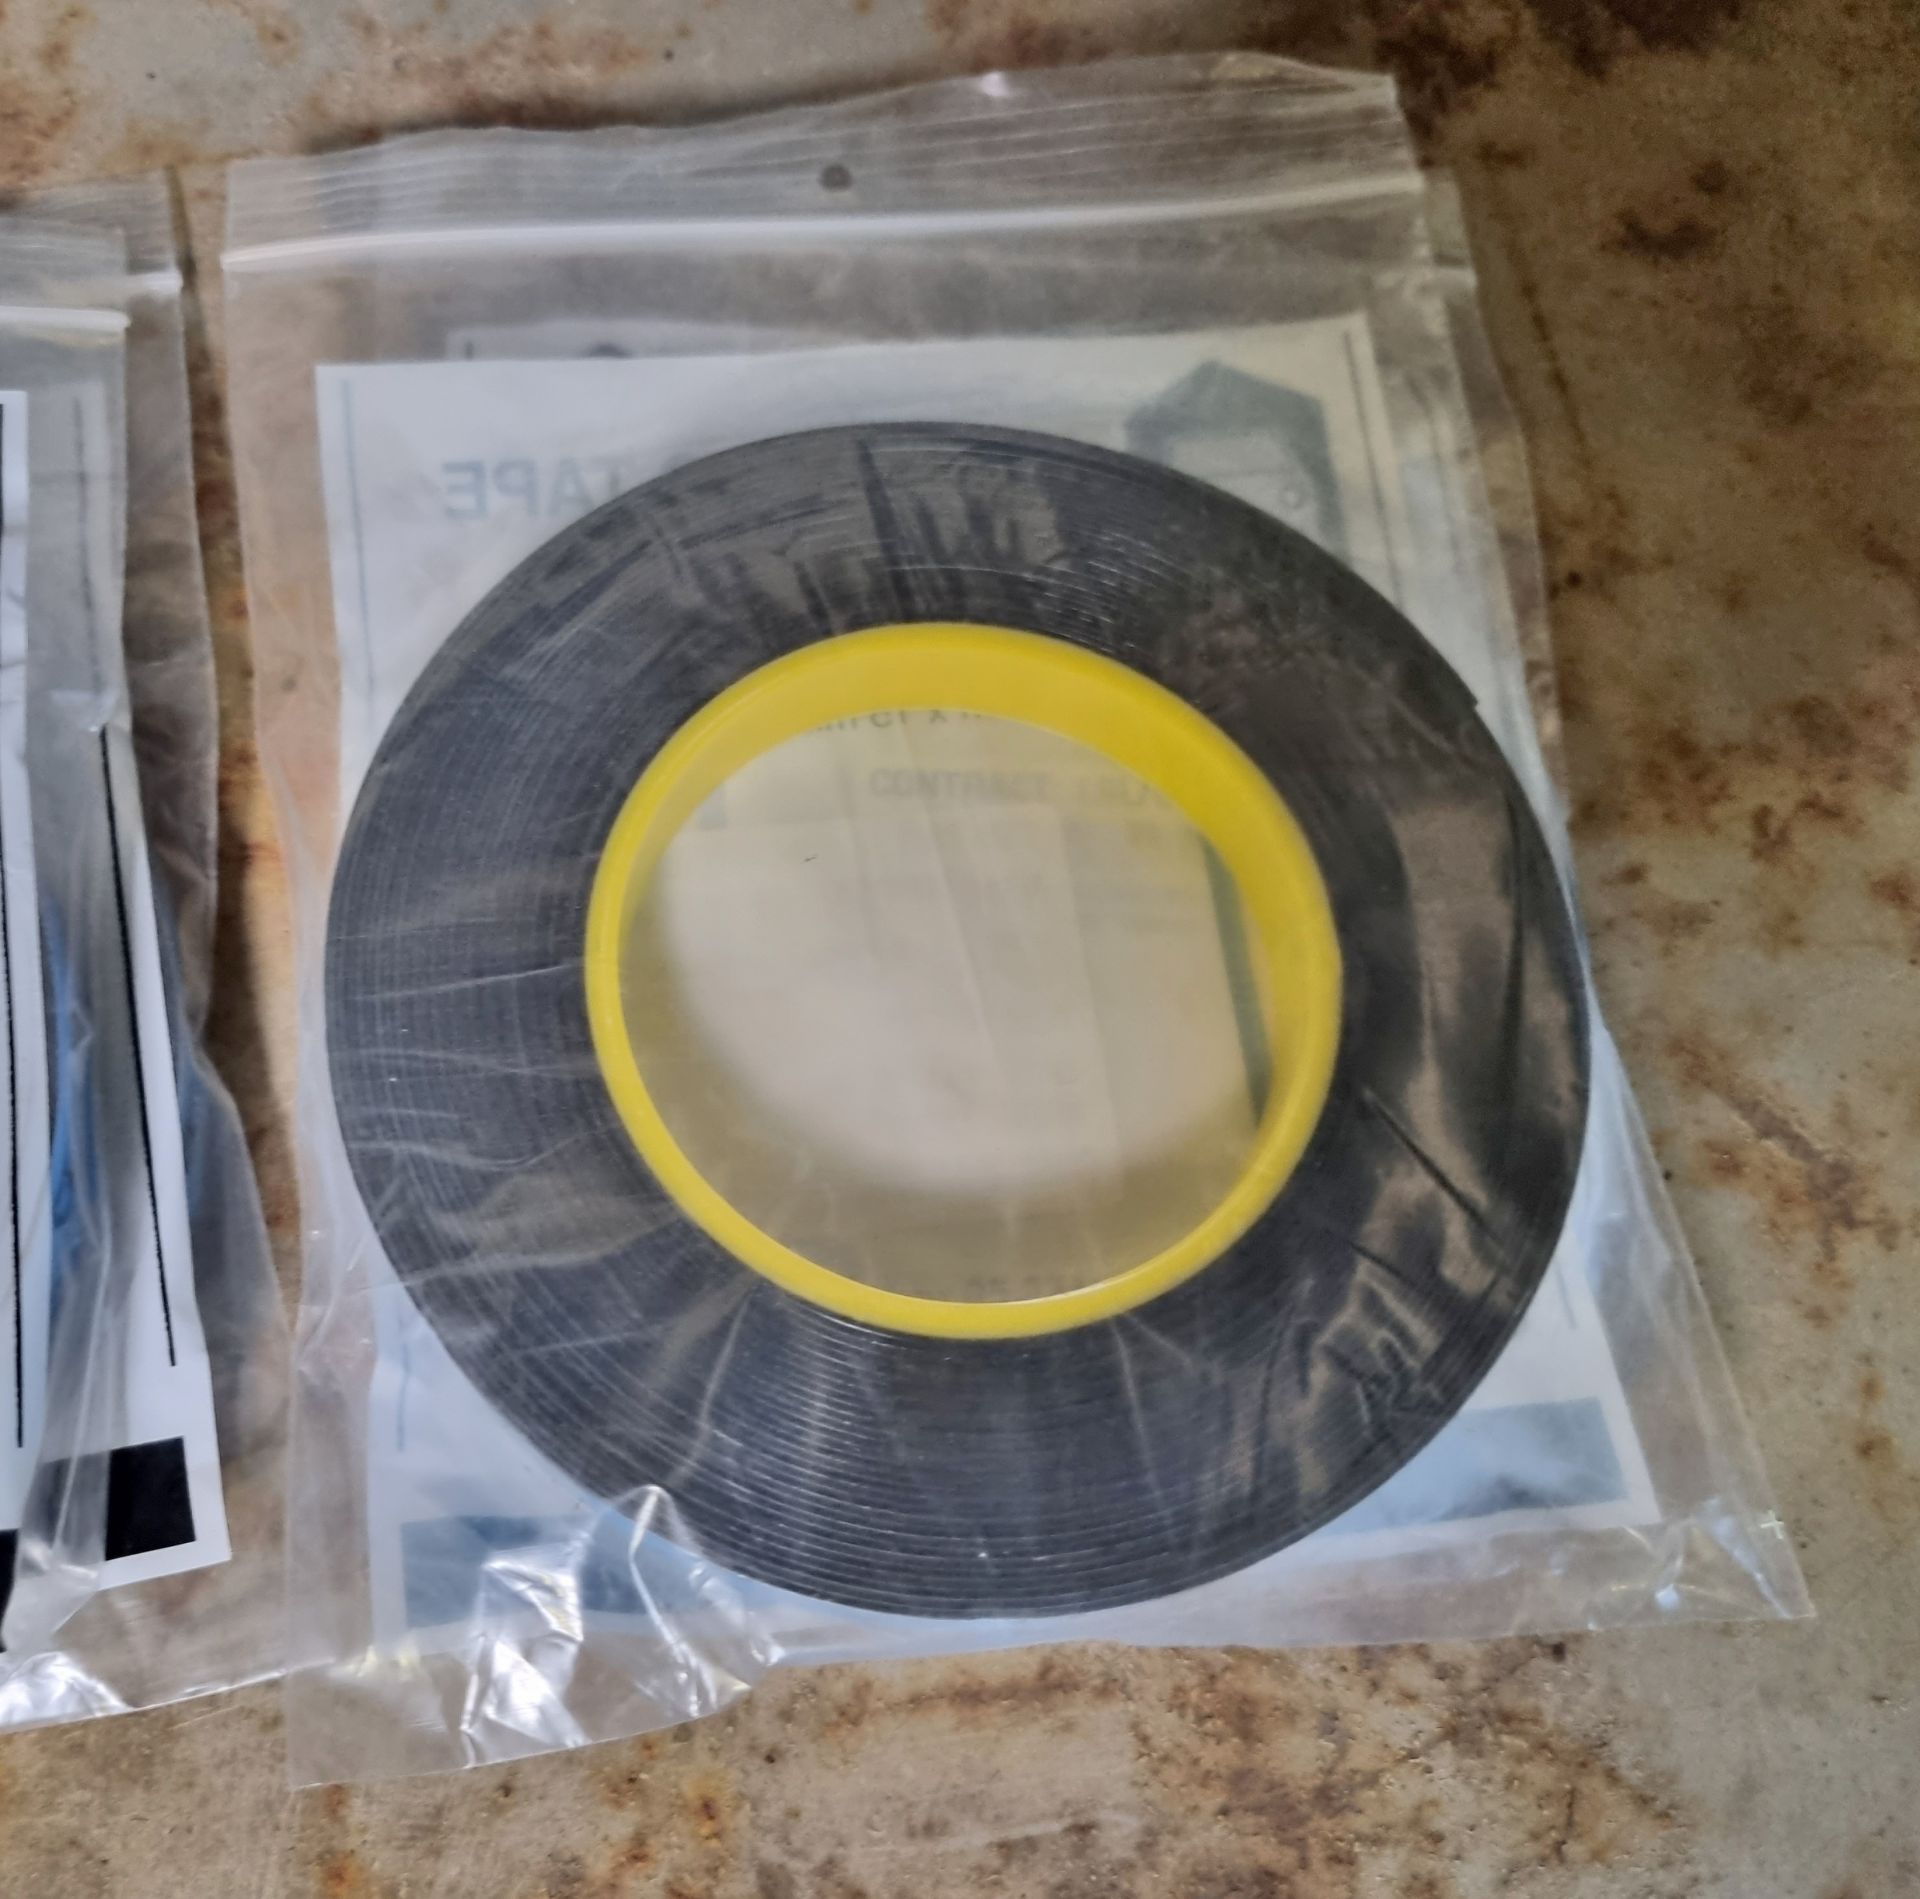 79x rolls of White PVC insulation tape - 50mm x 33M, 4x rolls of Innotec pressure sensitive adhesive - Bild 6 aus 7